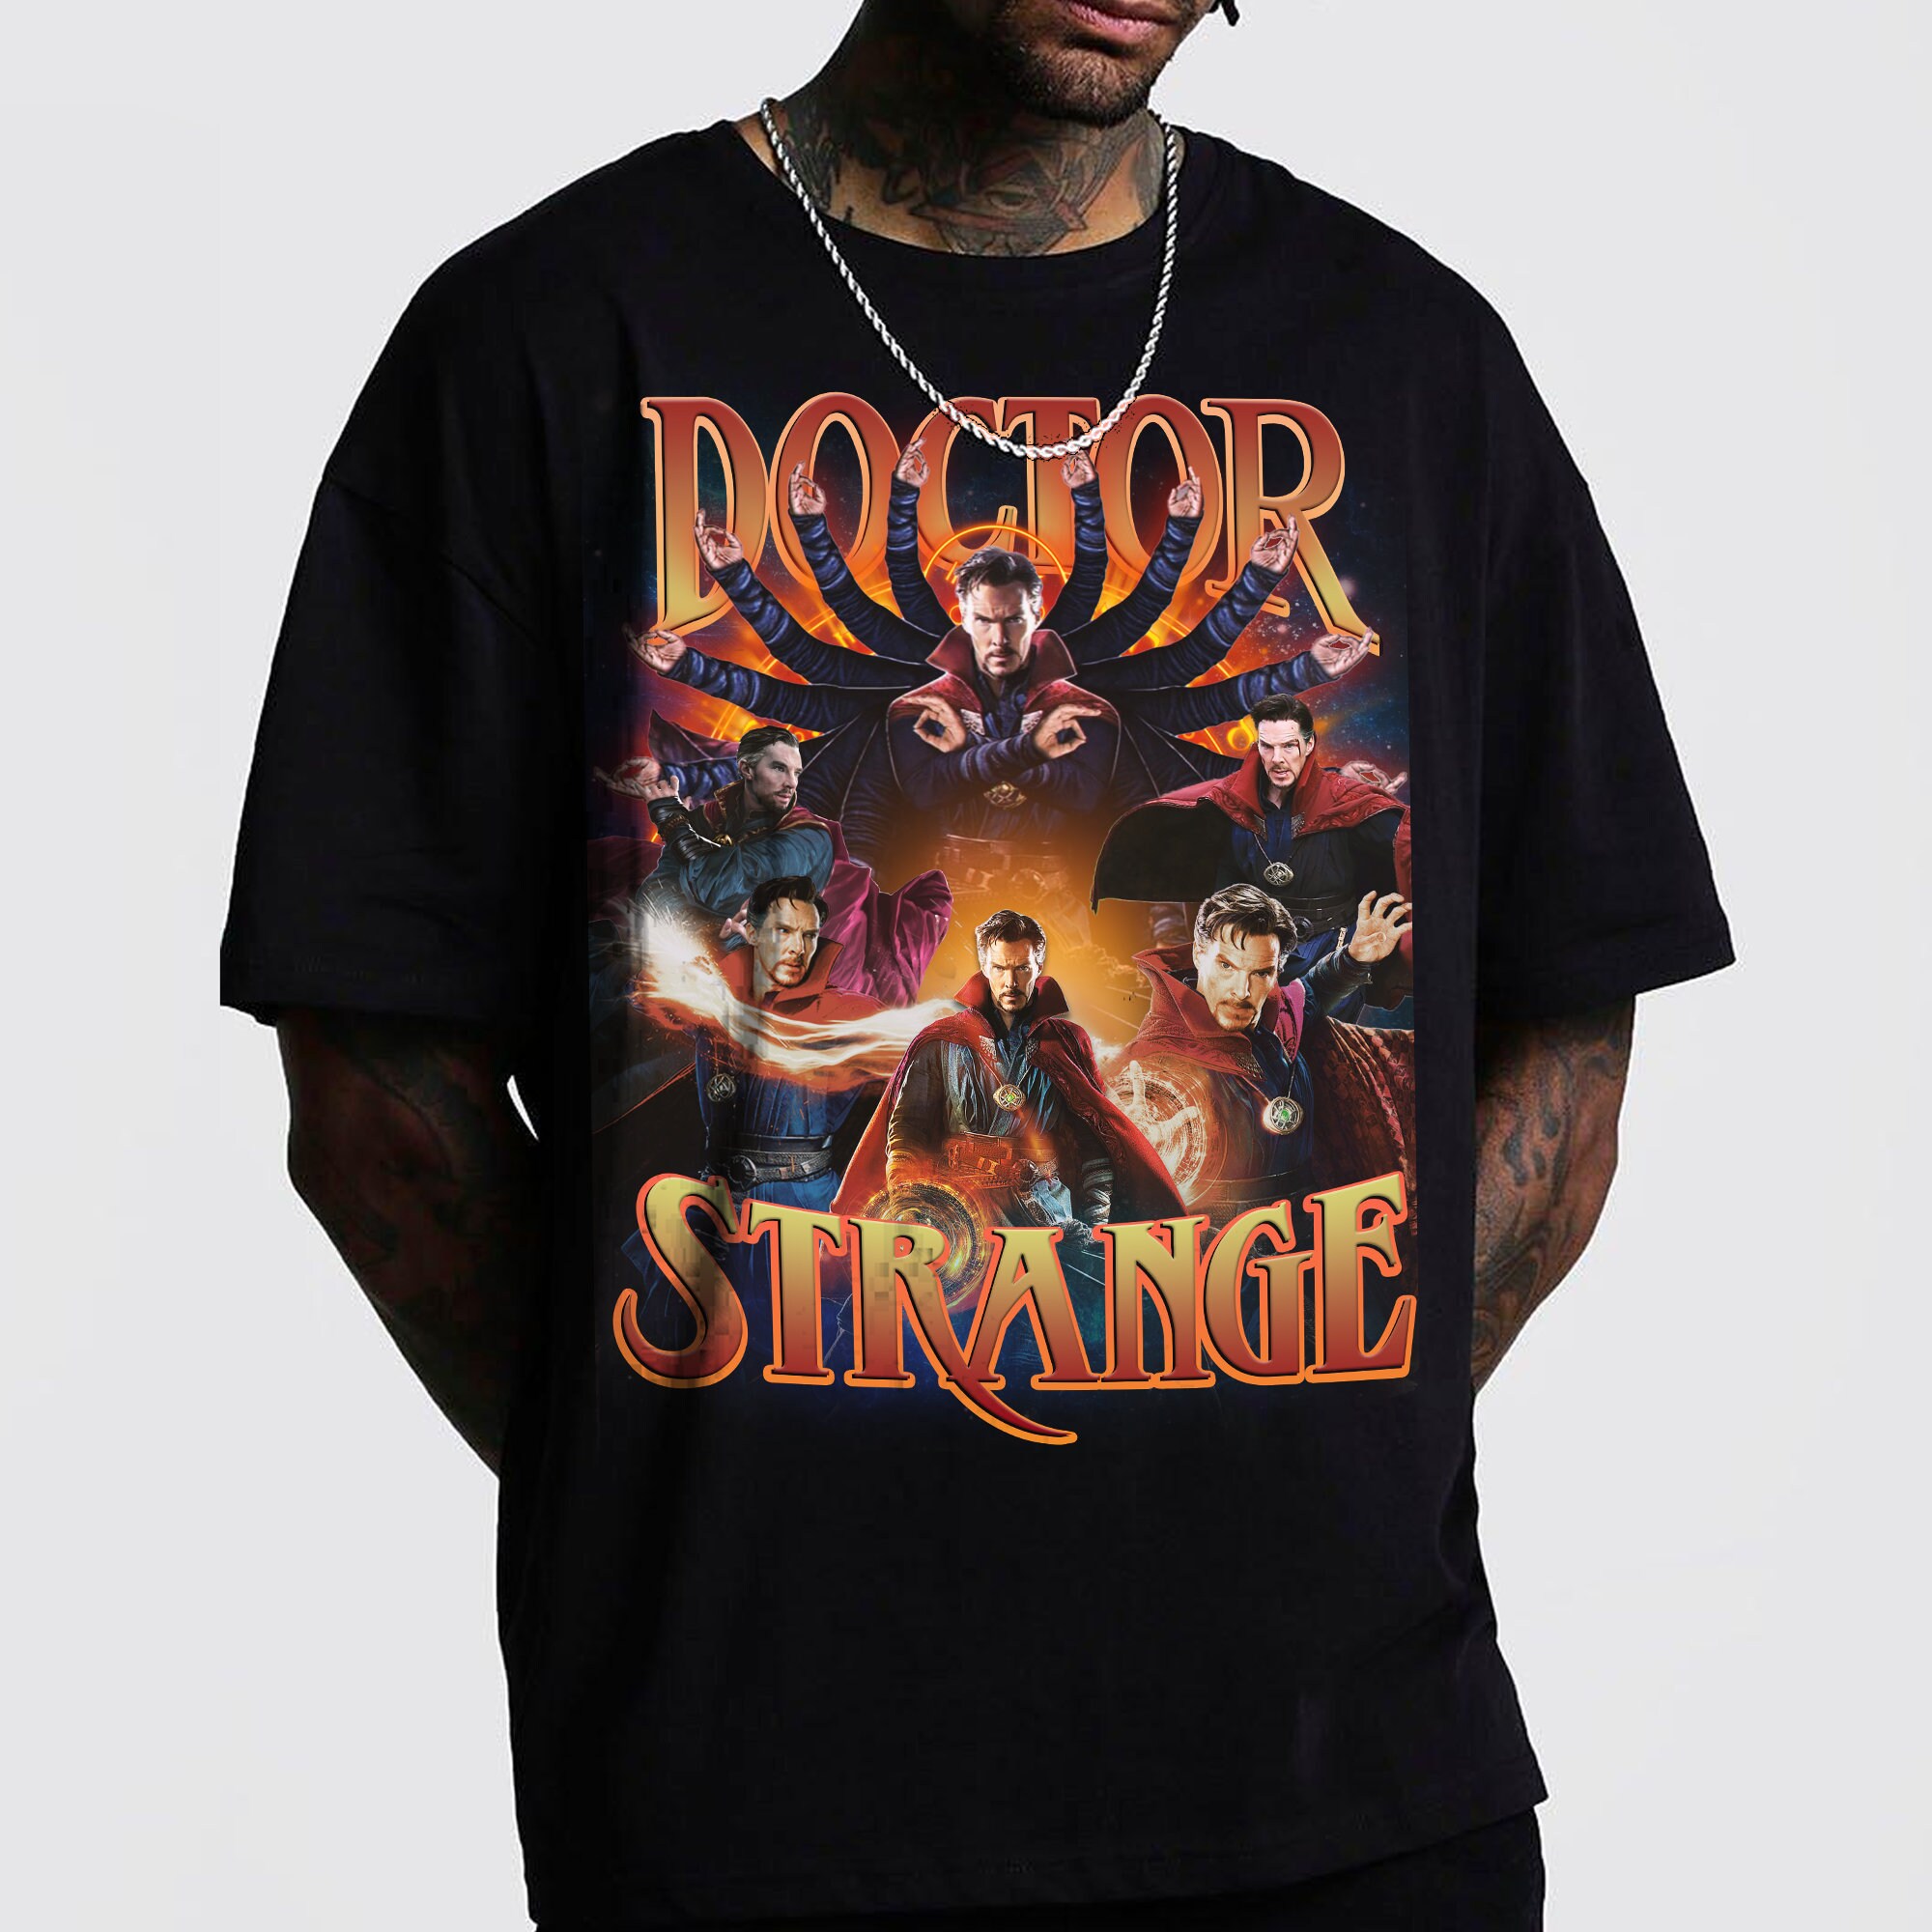 Vintage Doctor Strange Shirt, Sweatshirt, Hoodie  Multiverse Of Madness T-shirt   Gift for marvel lover, MCU gift